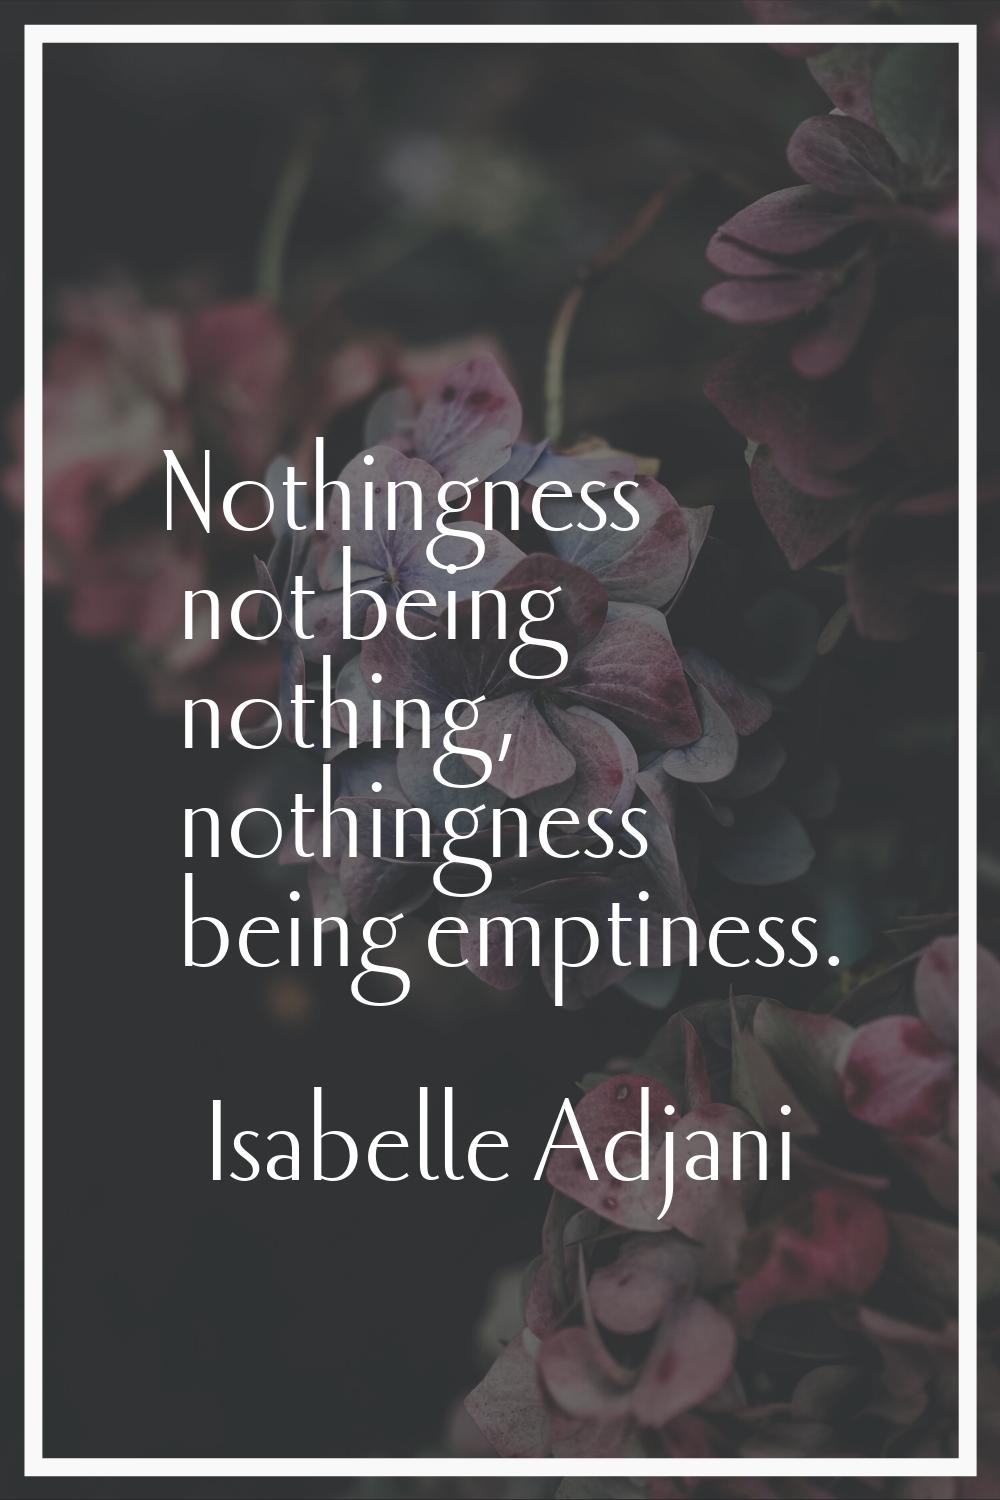 Nothingness not being nothing, nothingness being emptiness.